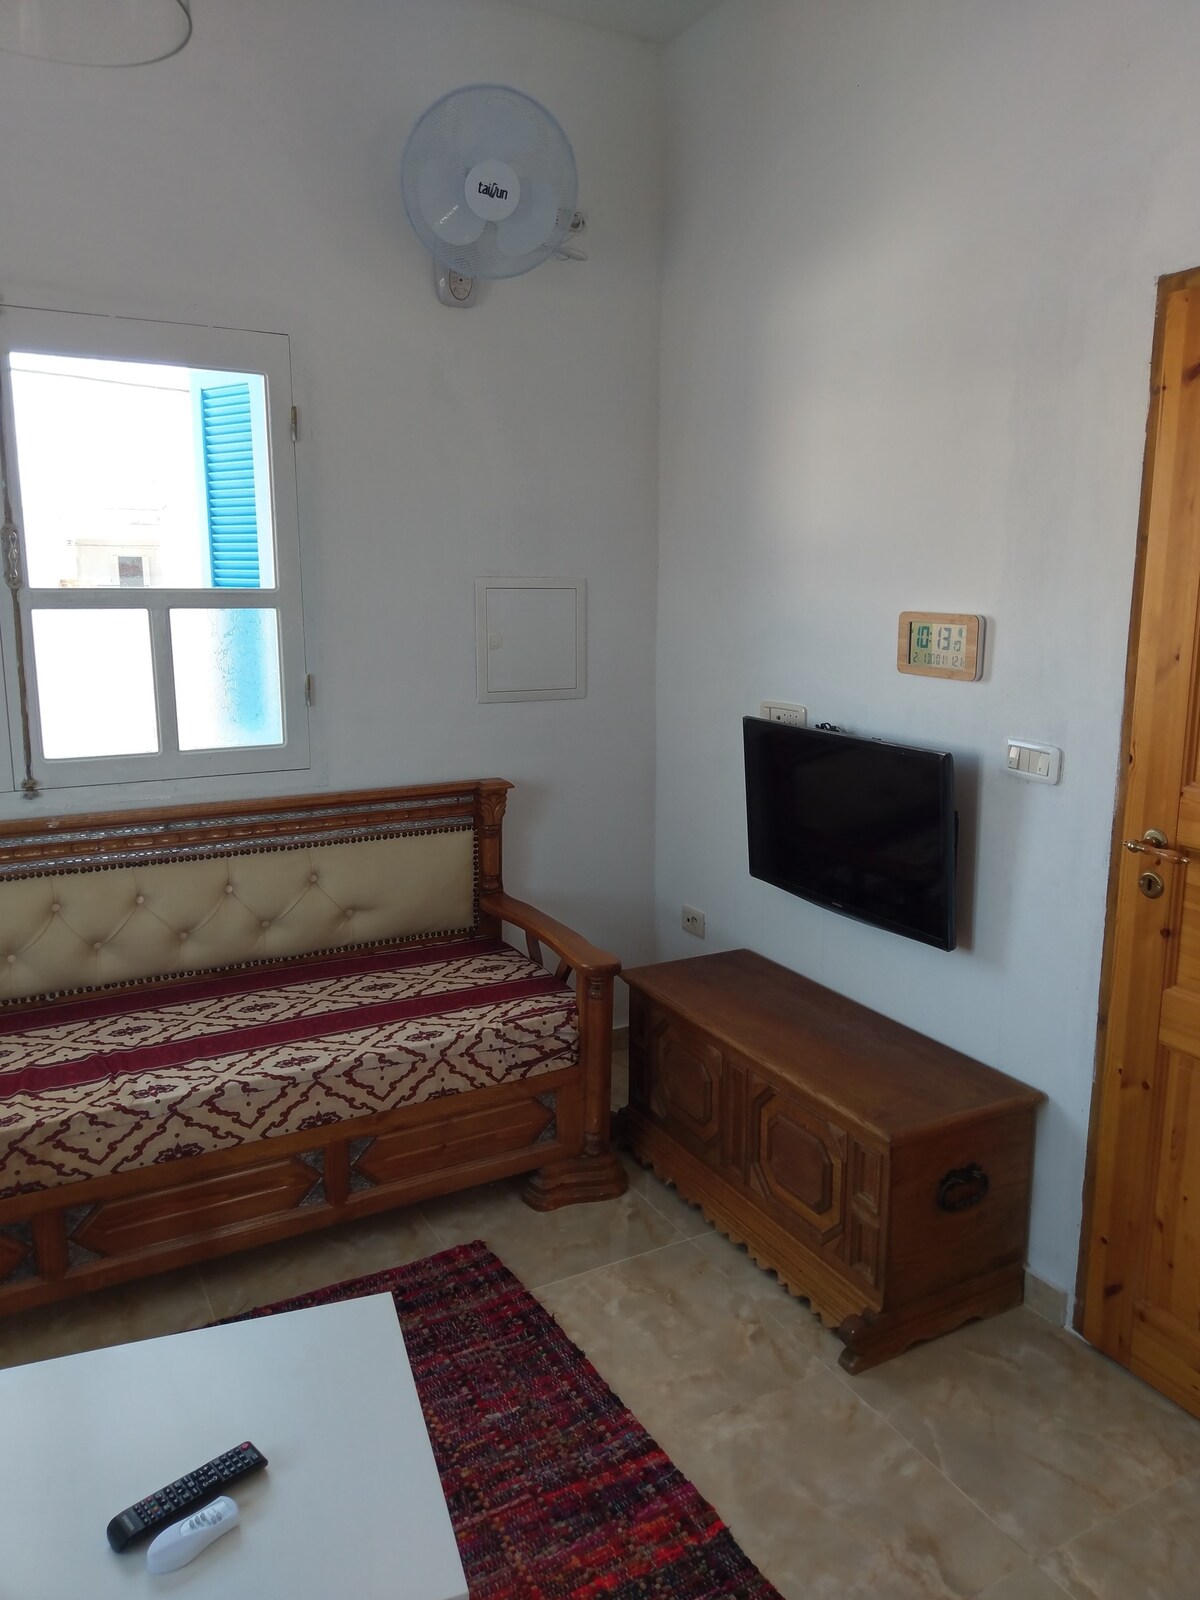 位于Salakta/Mahdia 2的单间公寓Warda可供入住。